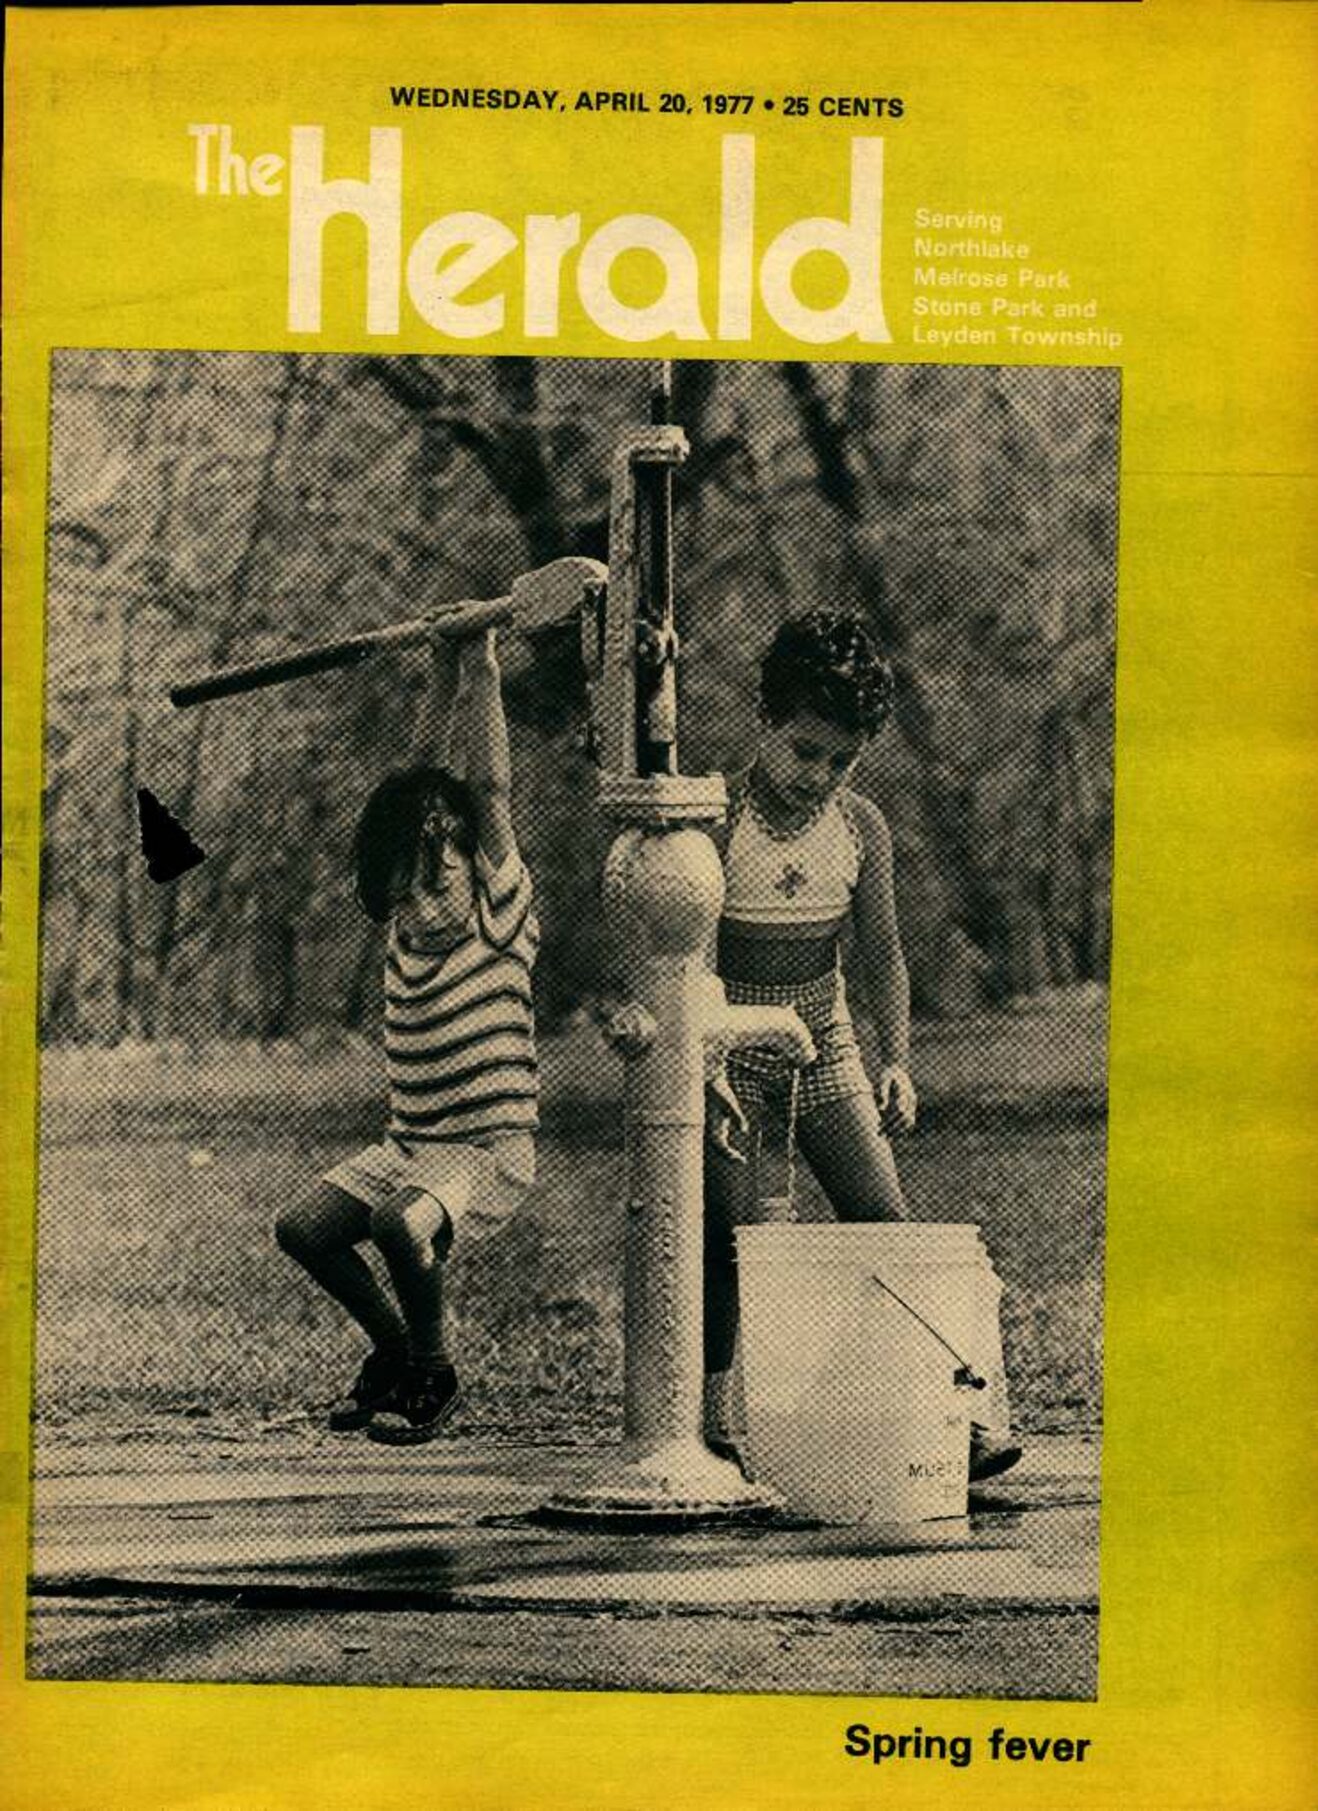 The Herald – 19770420